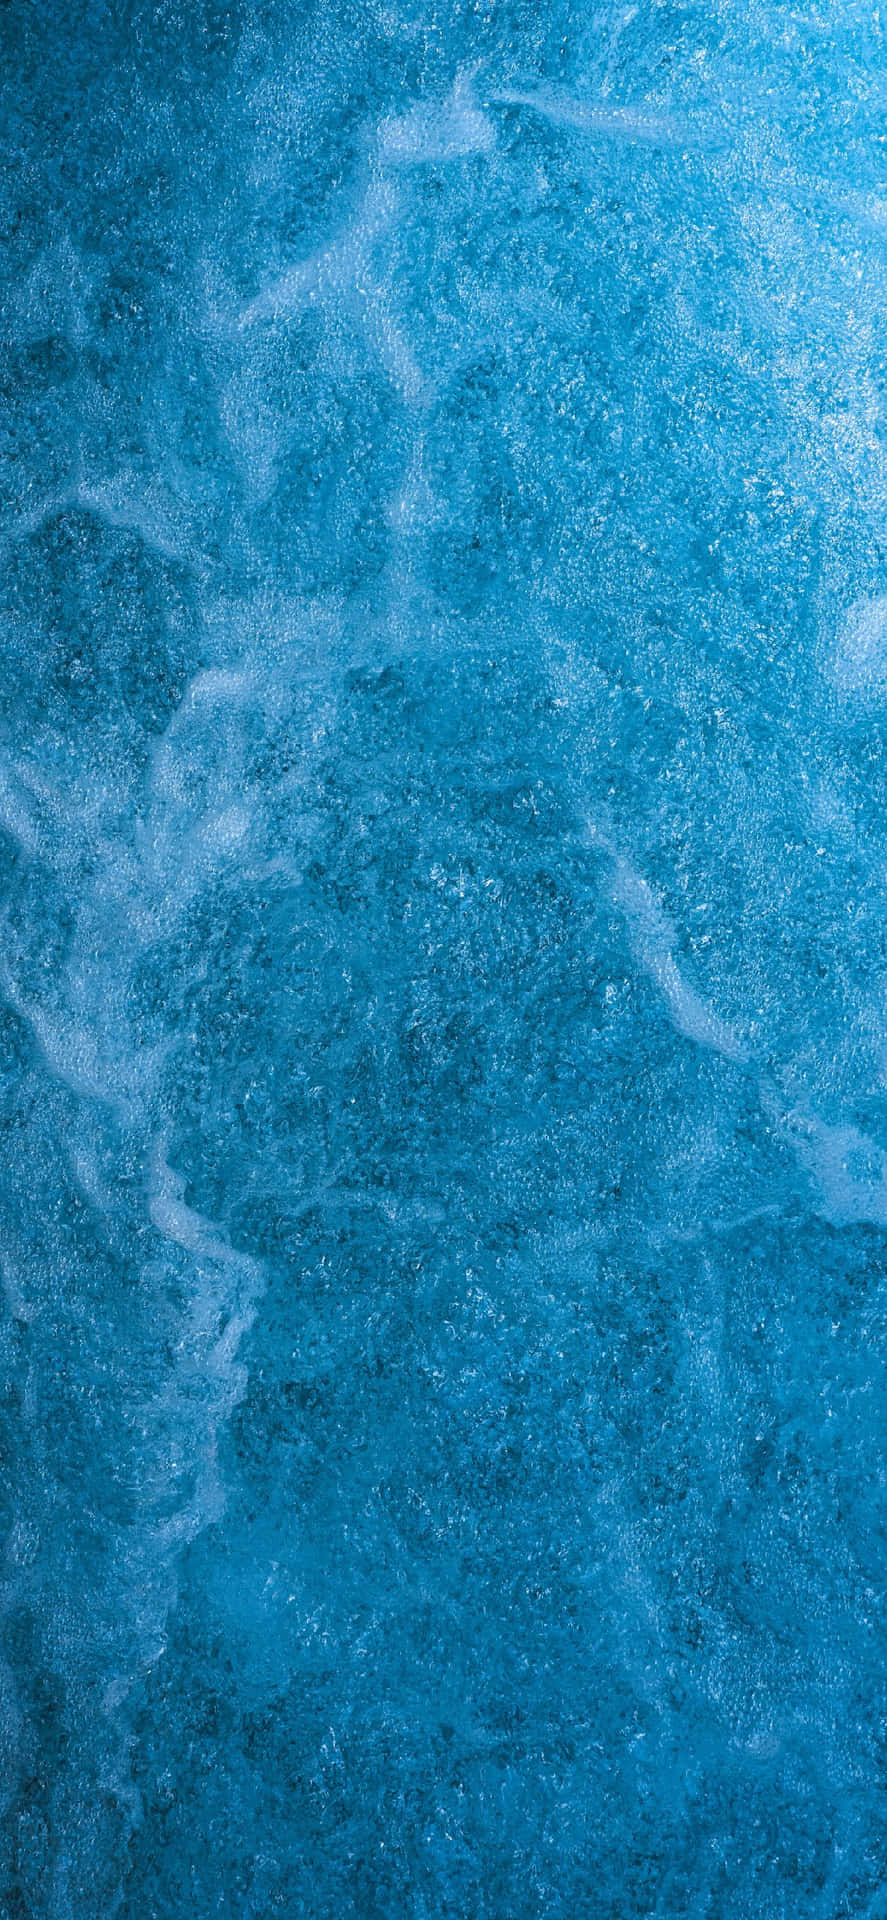 Adorable illustration of a dark blue character. Wallpaper